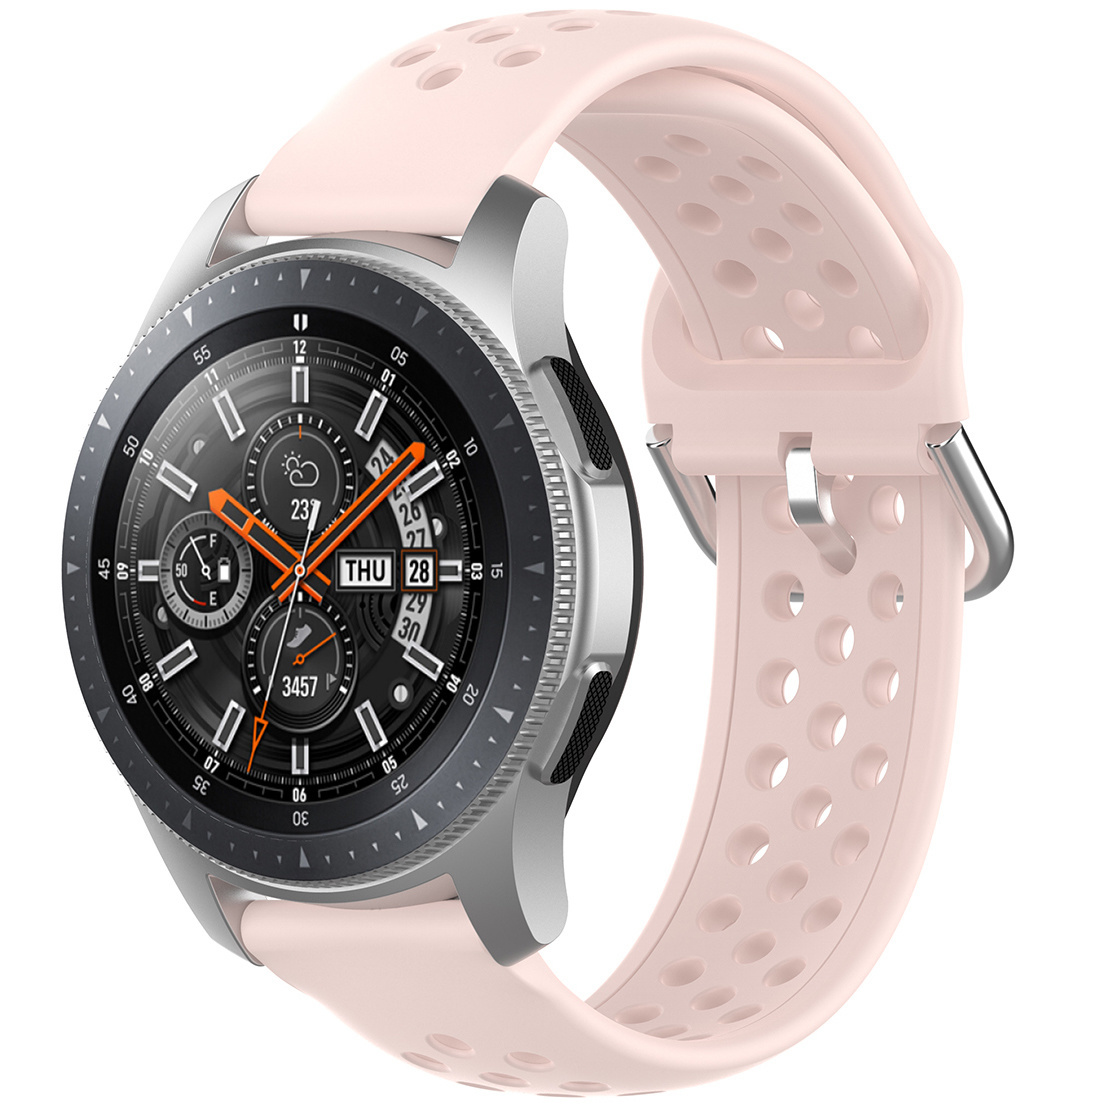 Samsung Galaxy Watch sport dubbel gesp band - roze